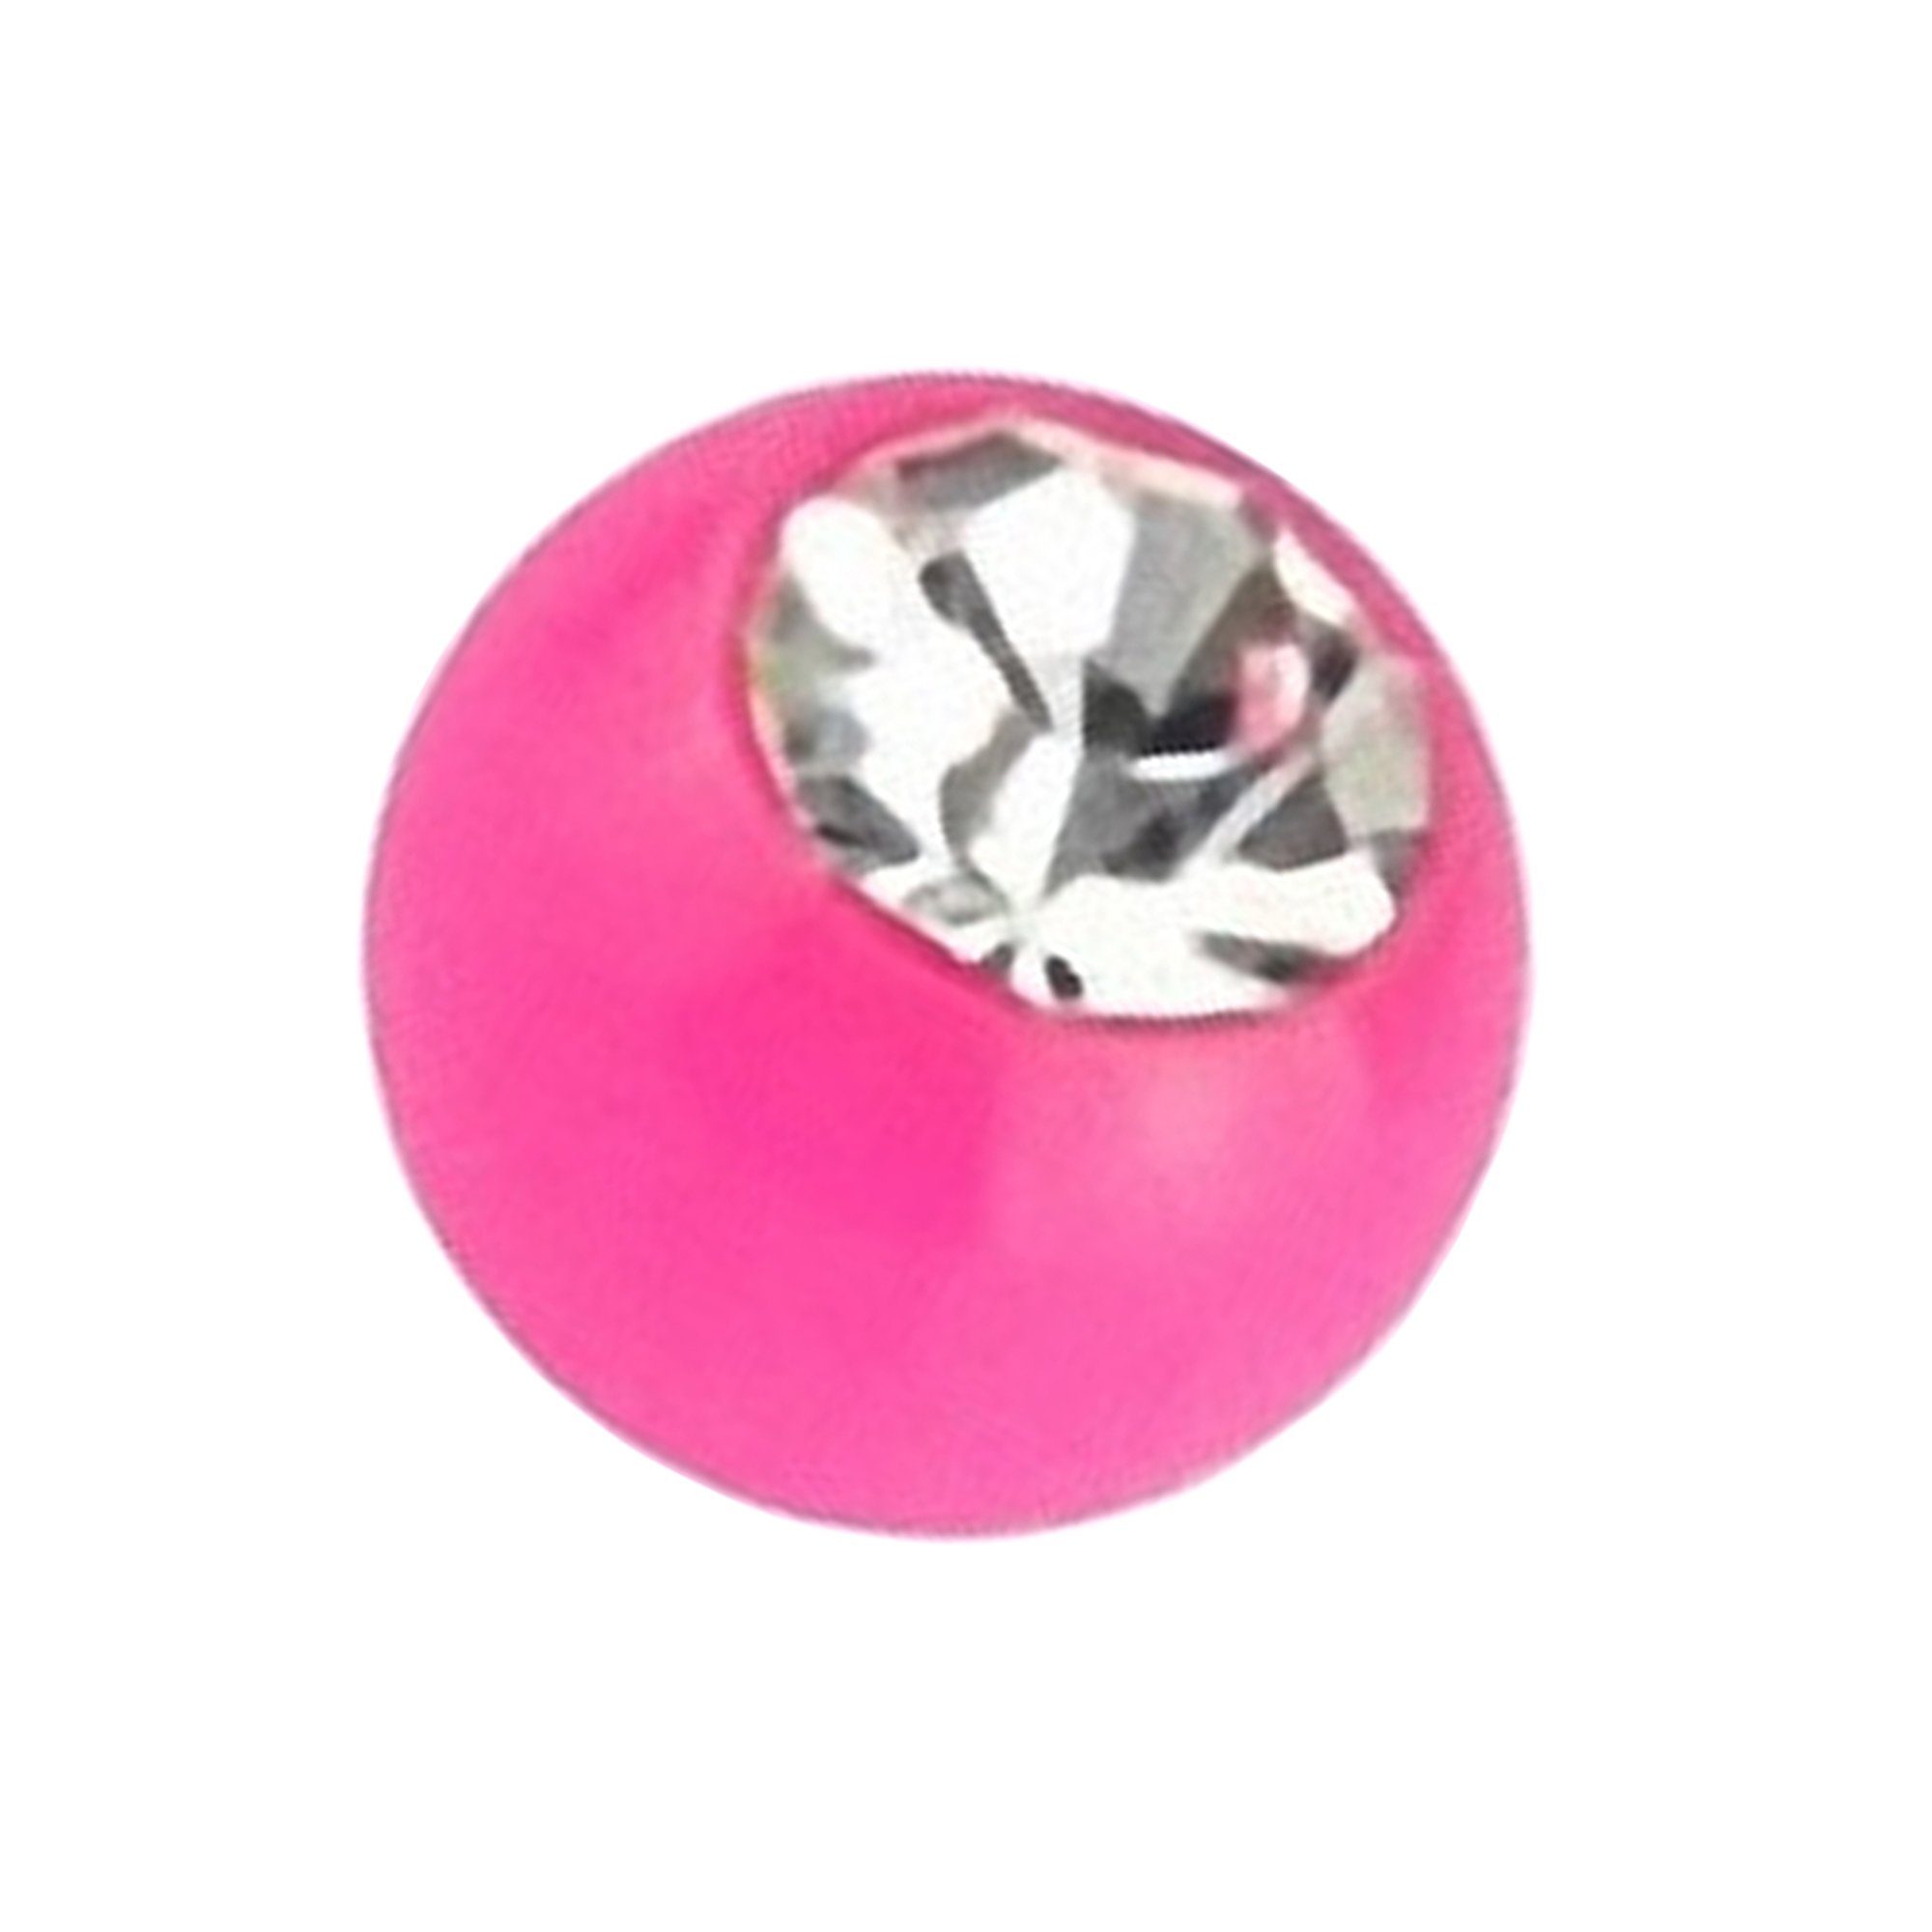 Taffstyle Piercing-Set Verschlusskugel Verschluss Piercing Schraubkugel UV Innengewinde Ersatz Kugel in Pink Ersatzteile Kristall verschiedenen